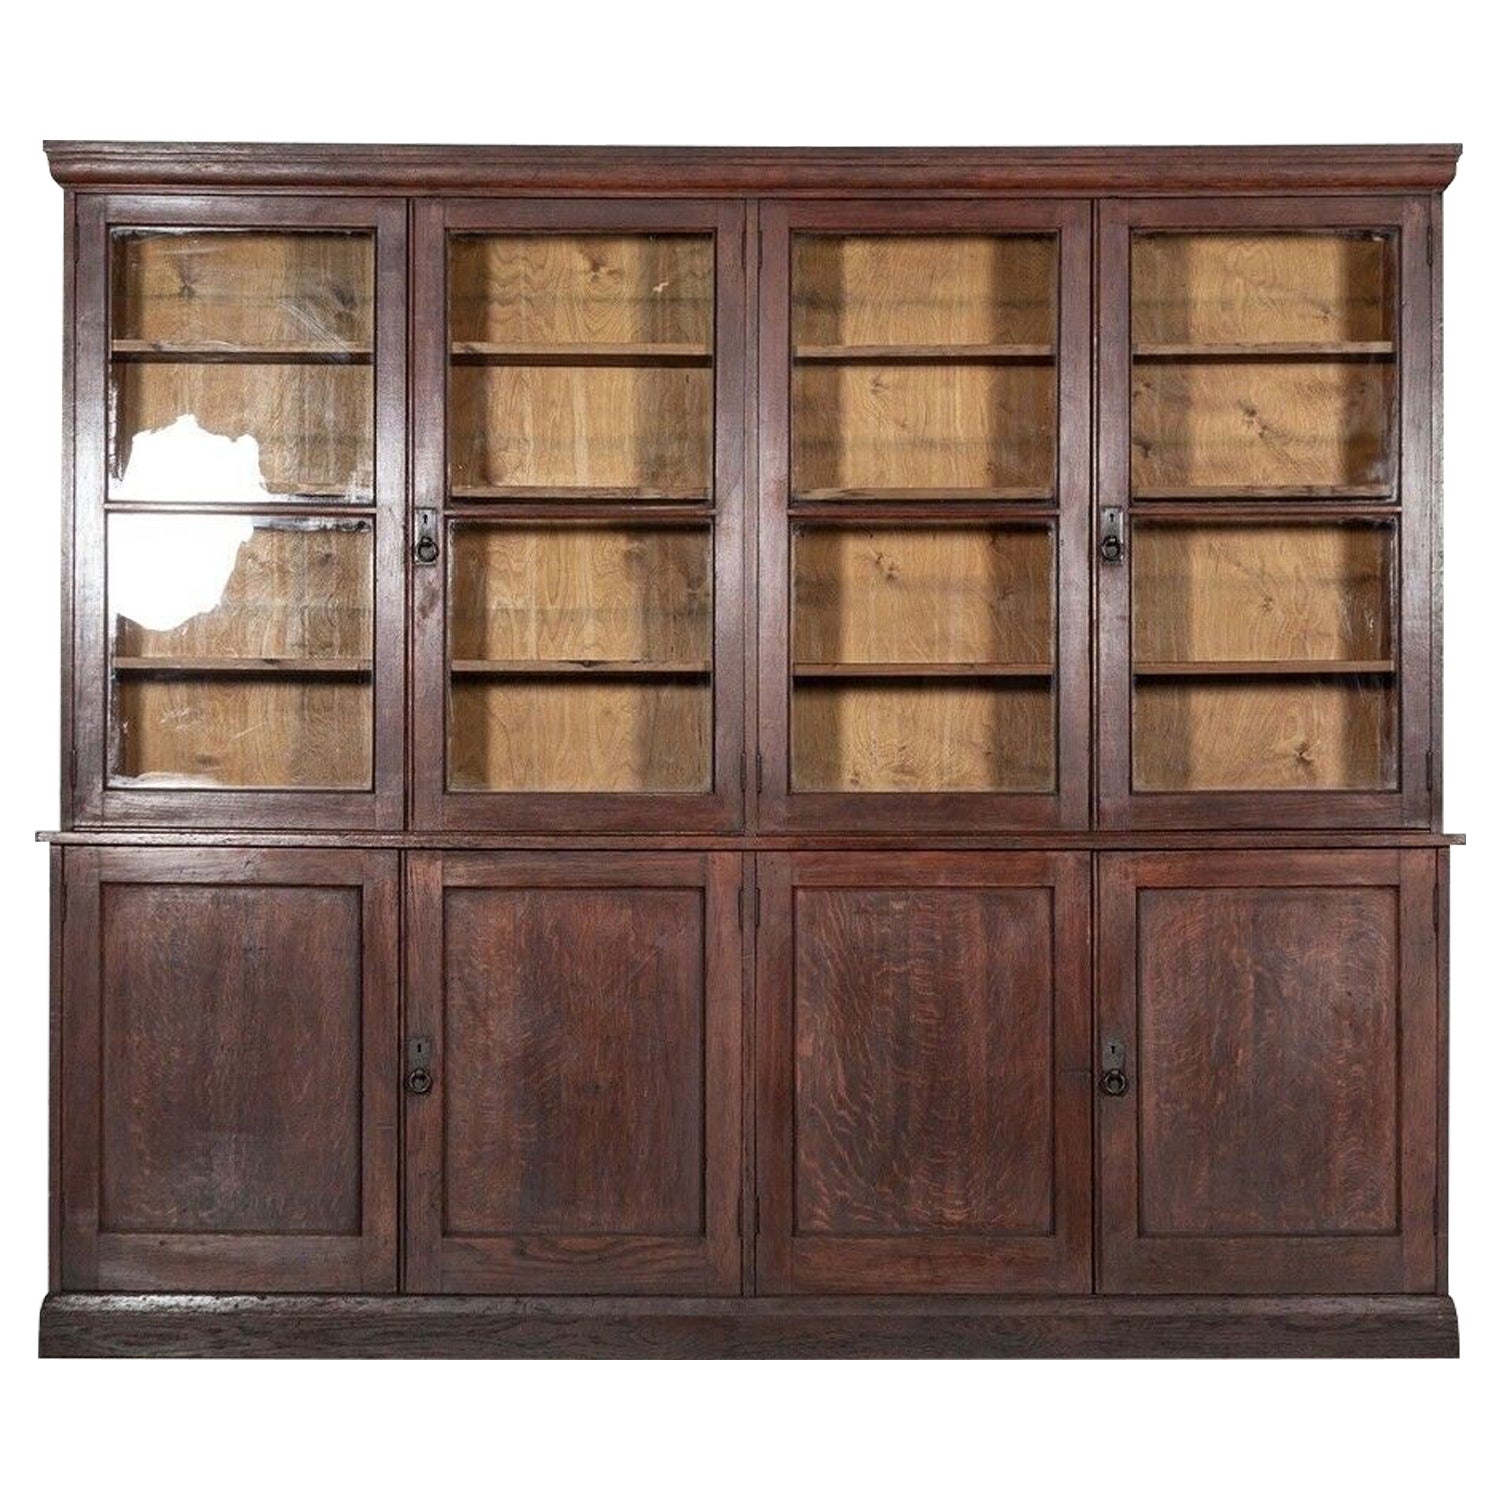 Monumental English Oak Glazed Bookcase For Sale